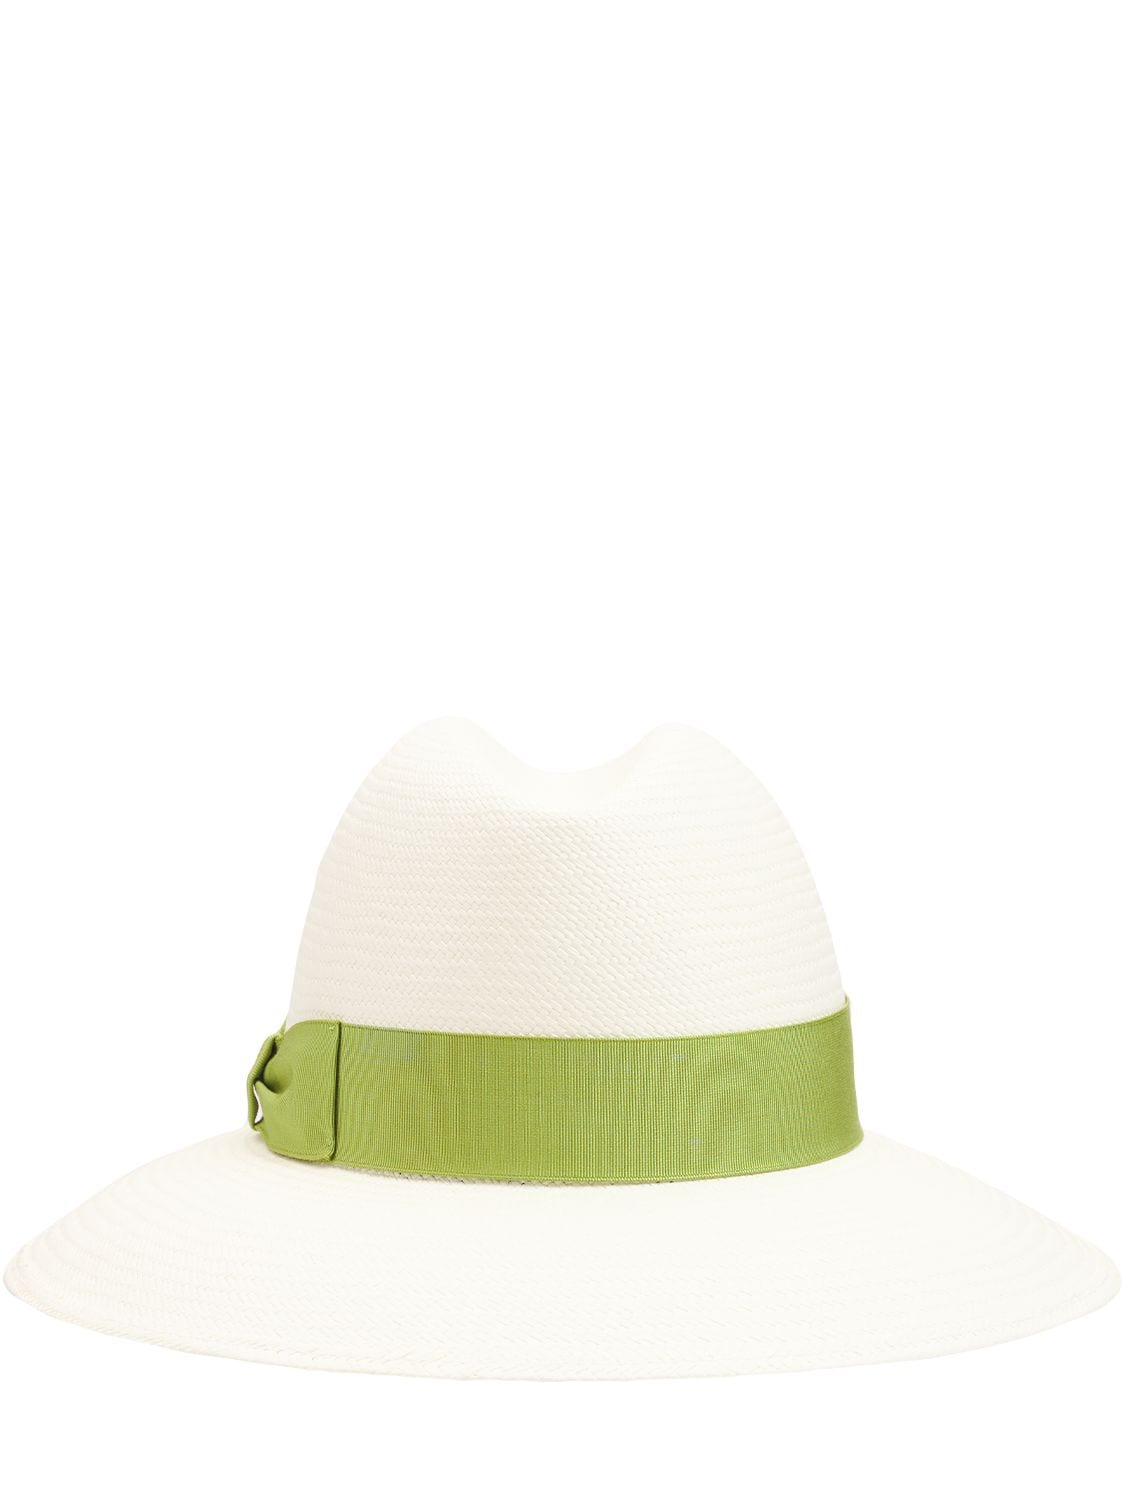 Claudette Fine Straw Panama Hat